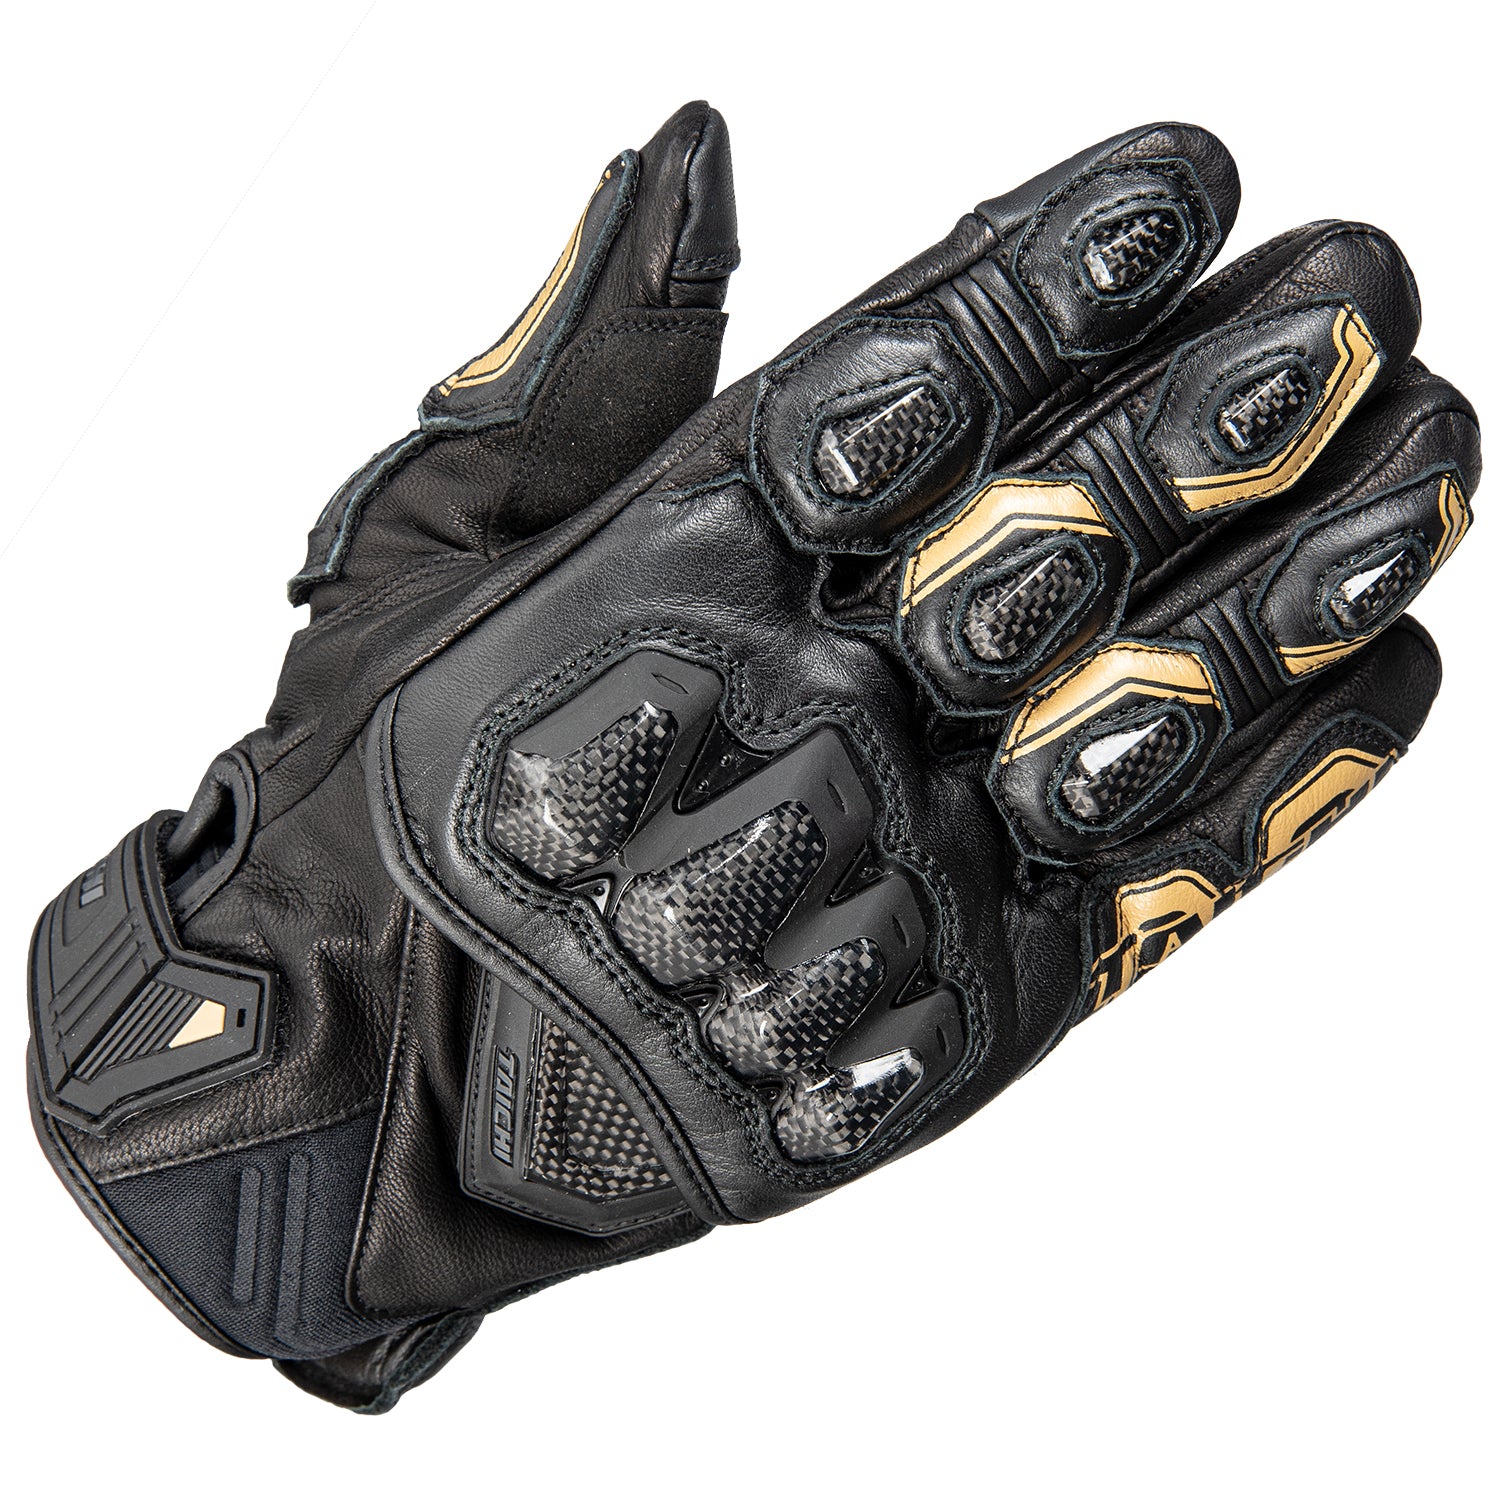 Oil-Tac Coppertech Leather Premium Riding Glove in Black Medium 7 / Black